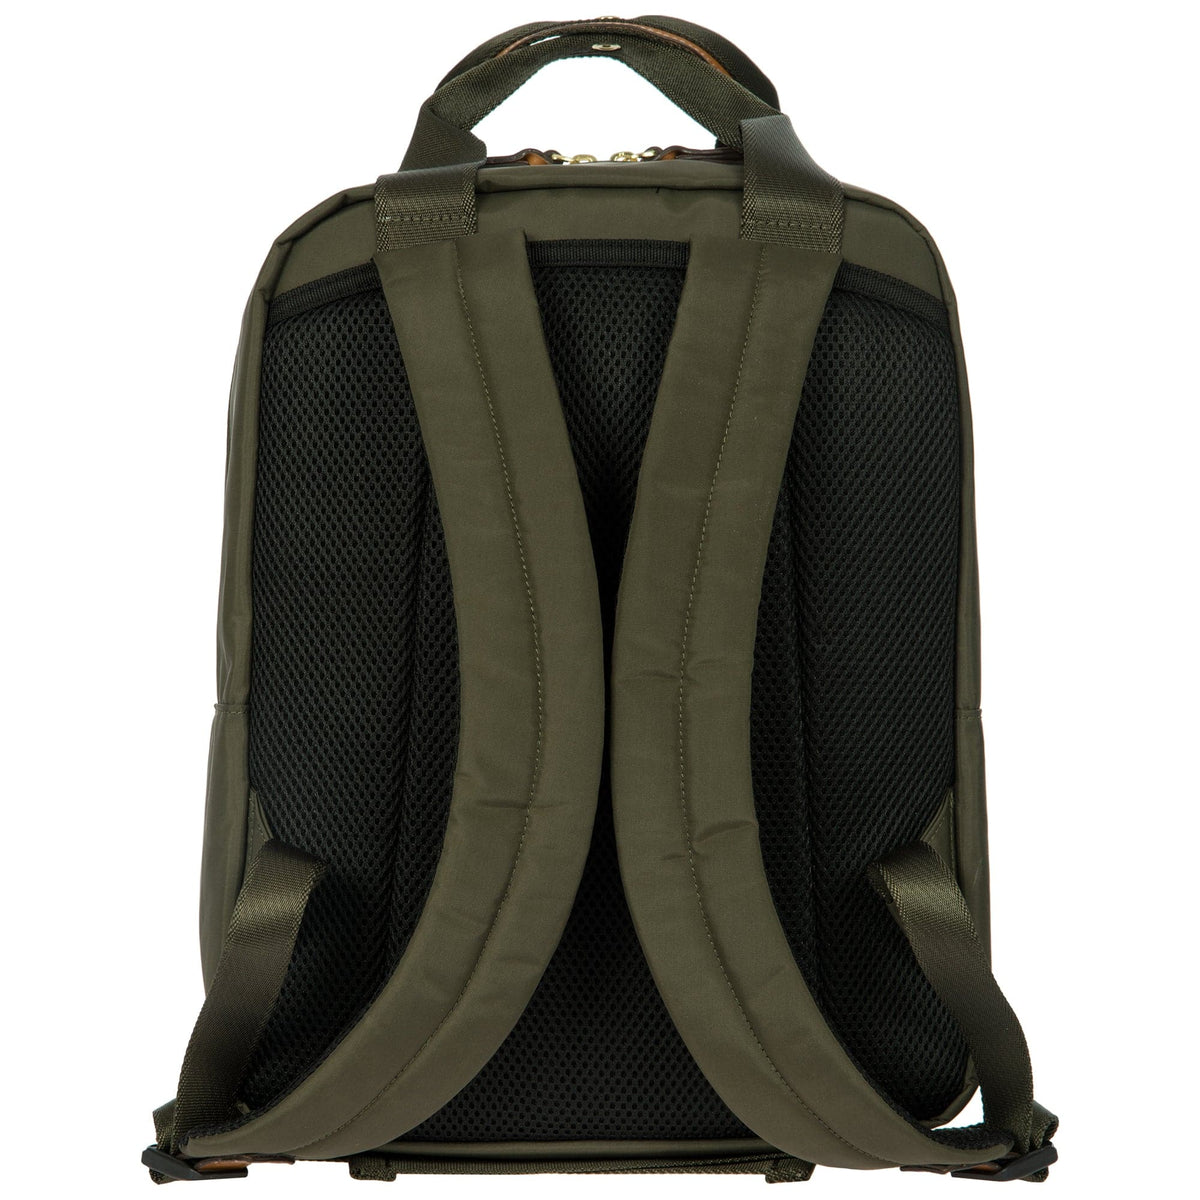 Bric's X-Bag/X-Travel Urban Backpack